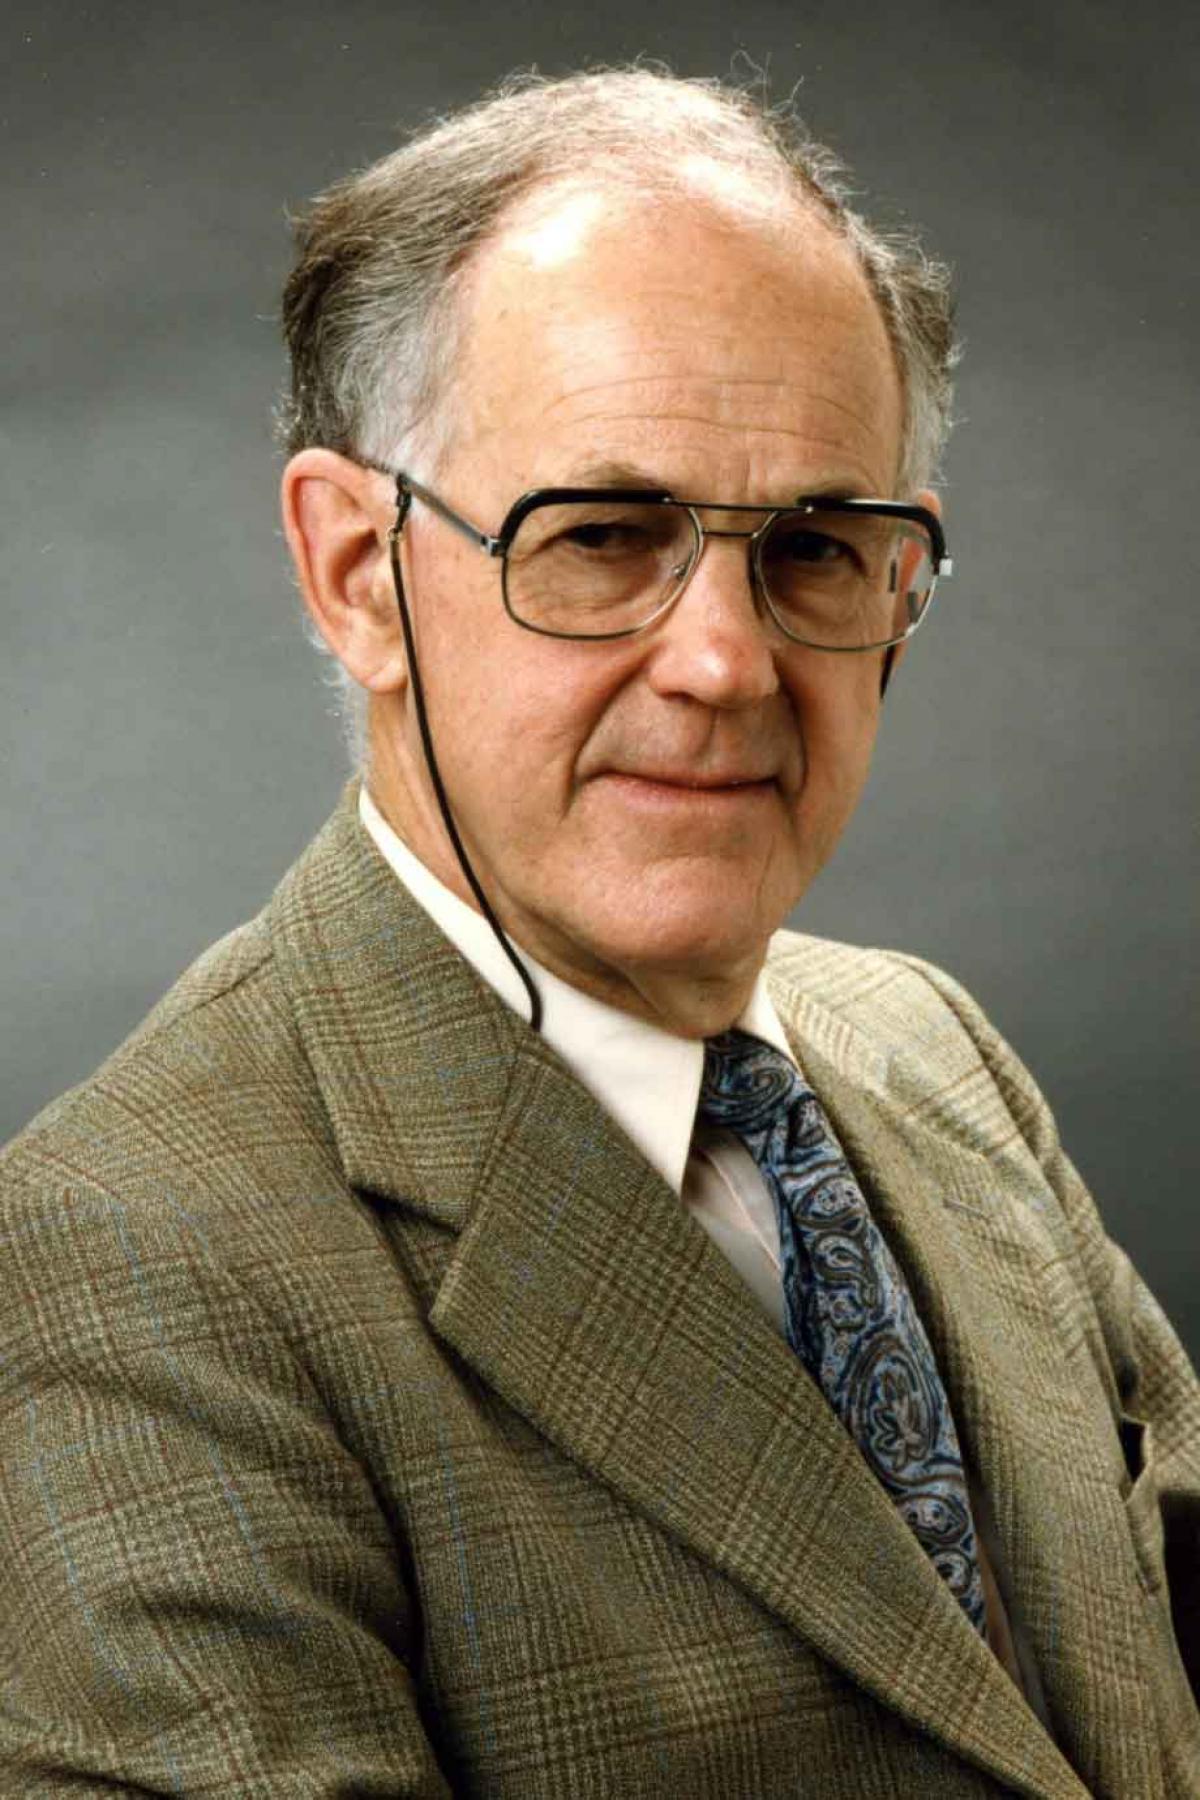 Professor John Prescott